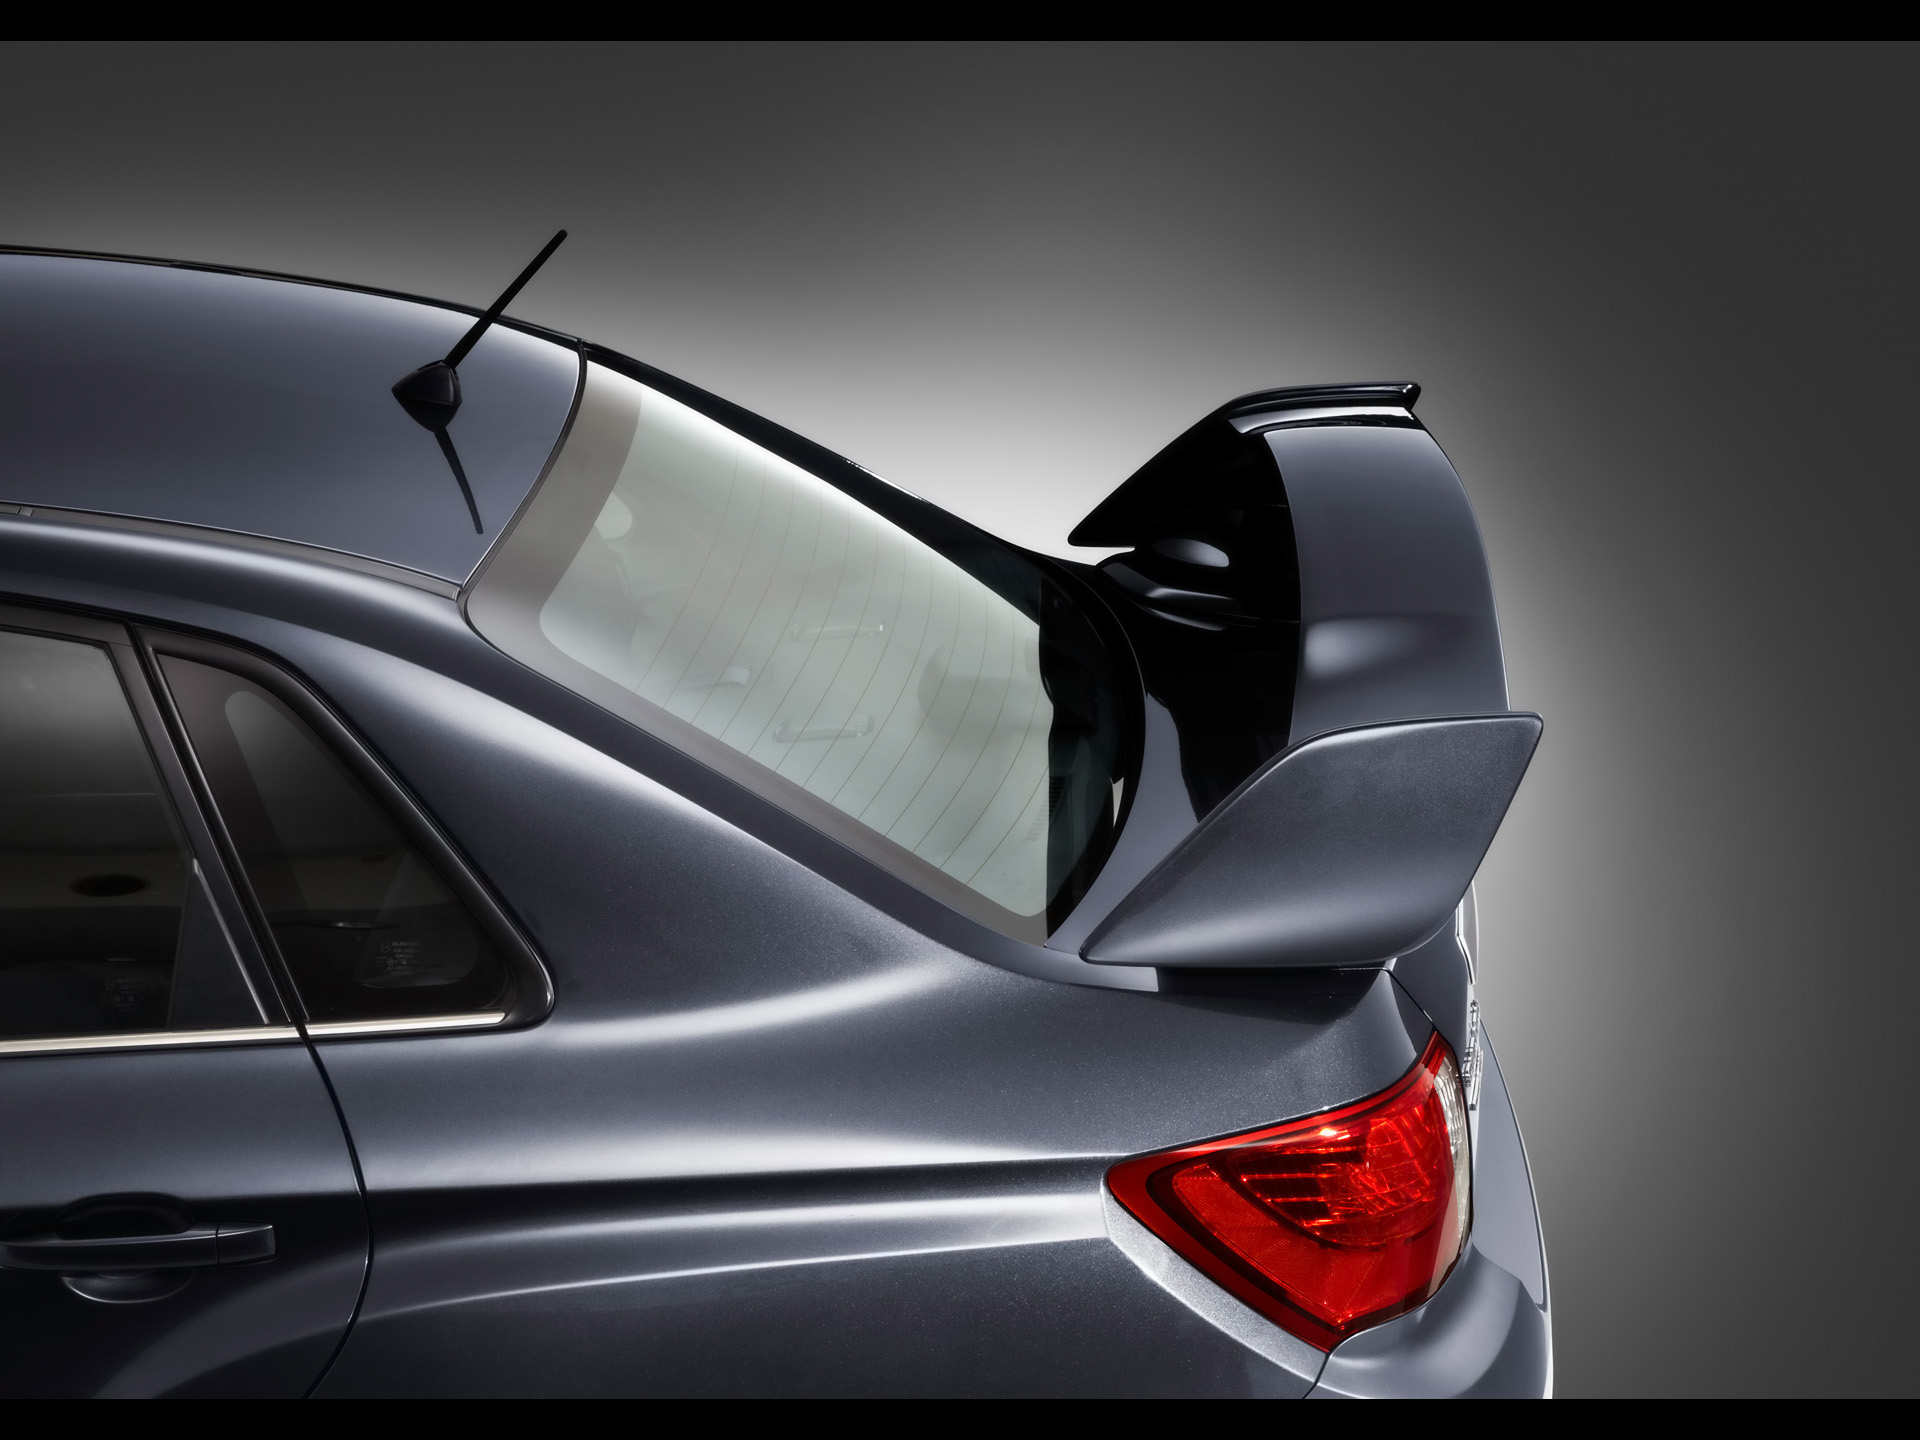 2011 Subaru Impreza WRX STI 4-Door